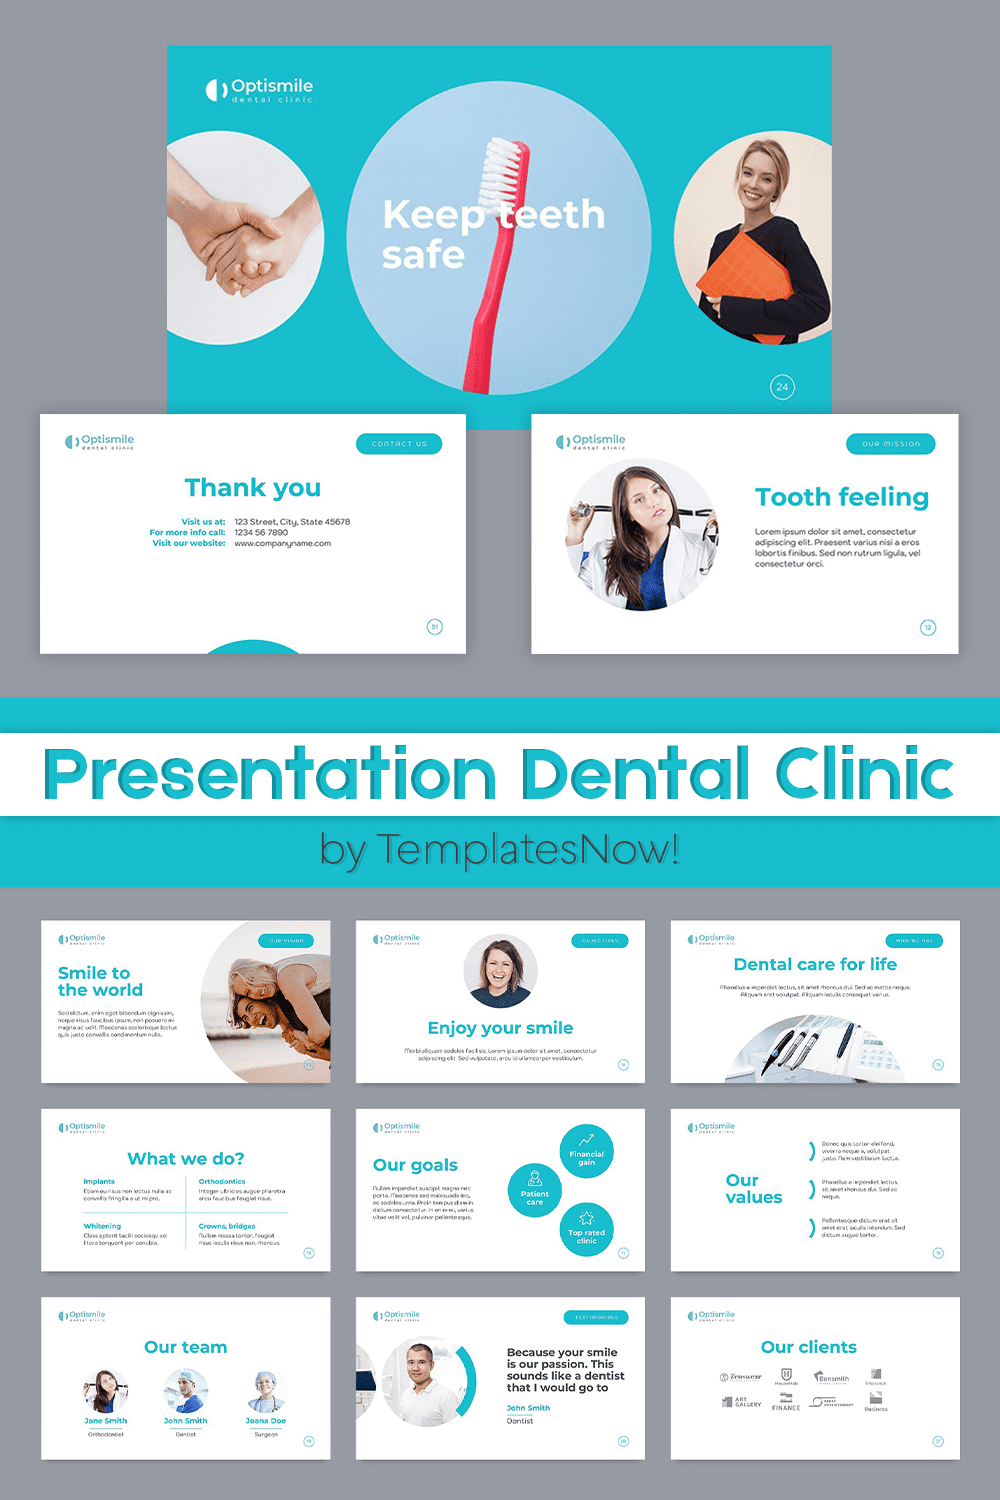 Presentation Dental Clinic pinterest image.